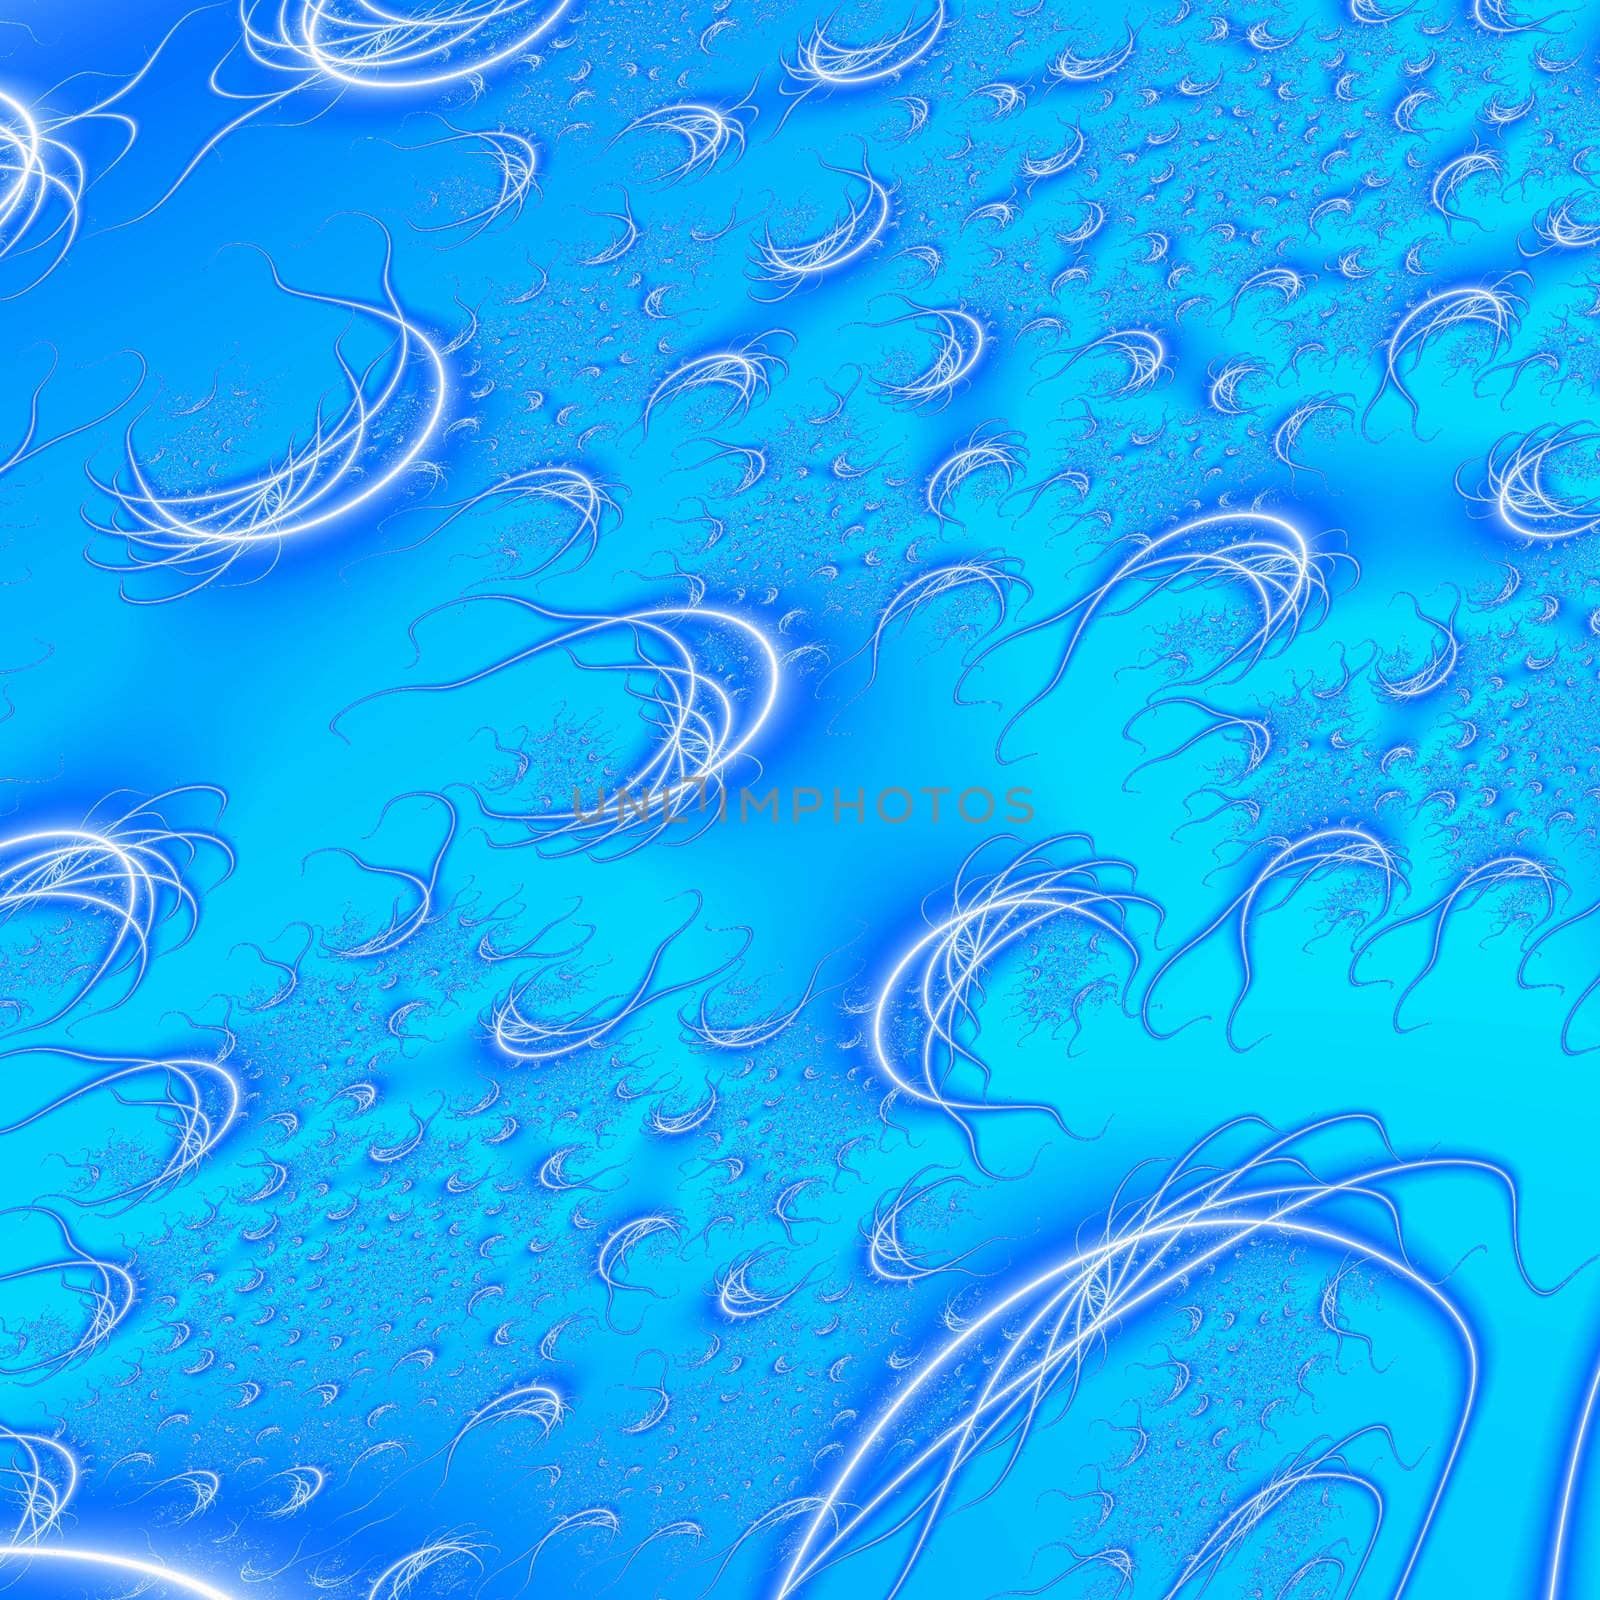 Abstract marine fractal background illustration